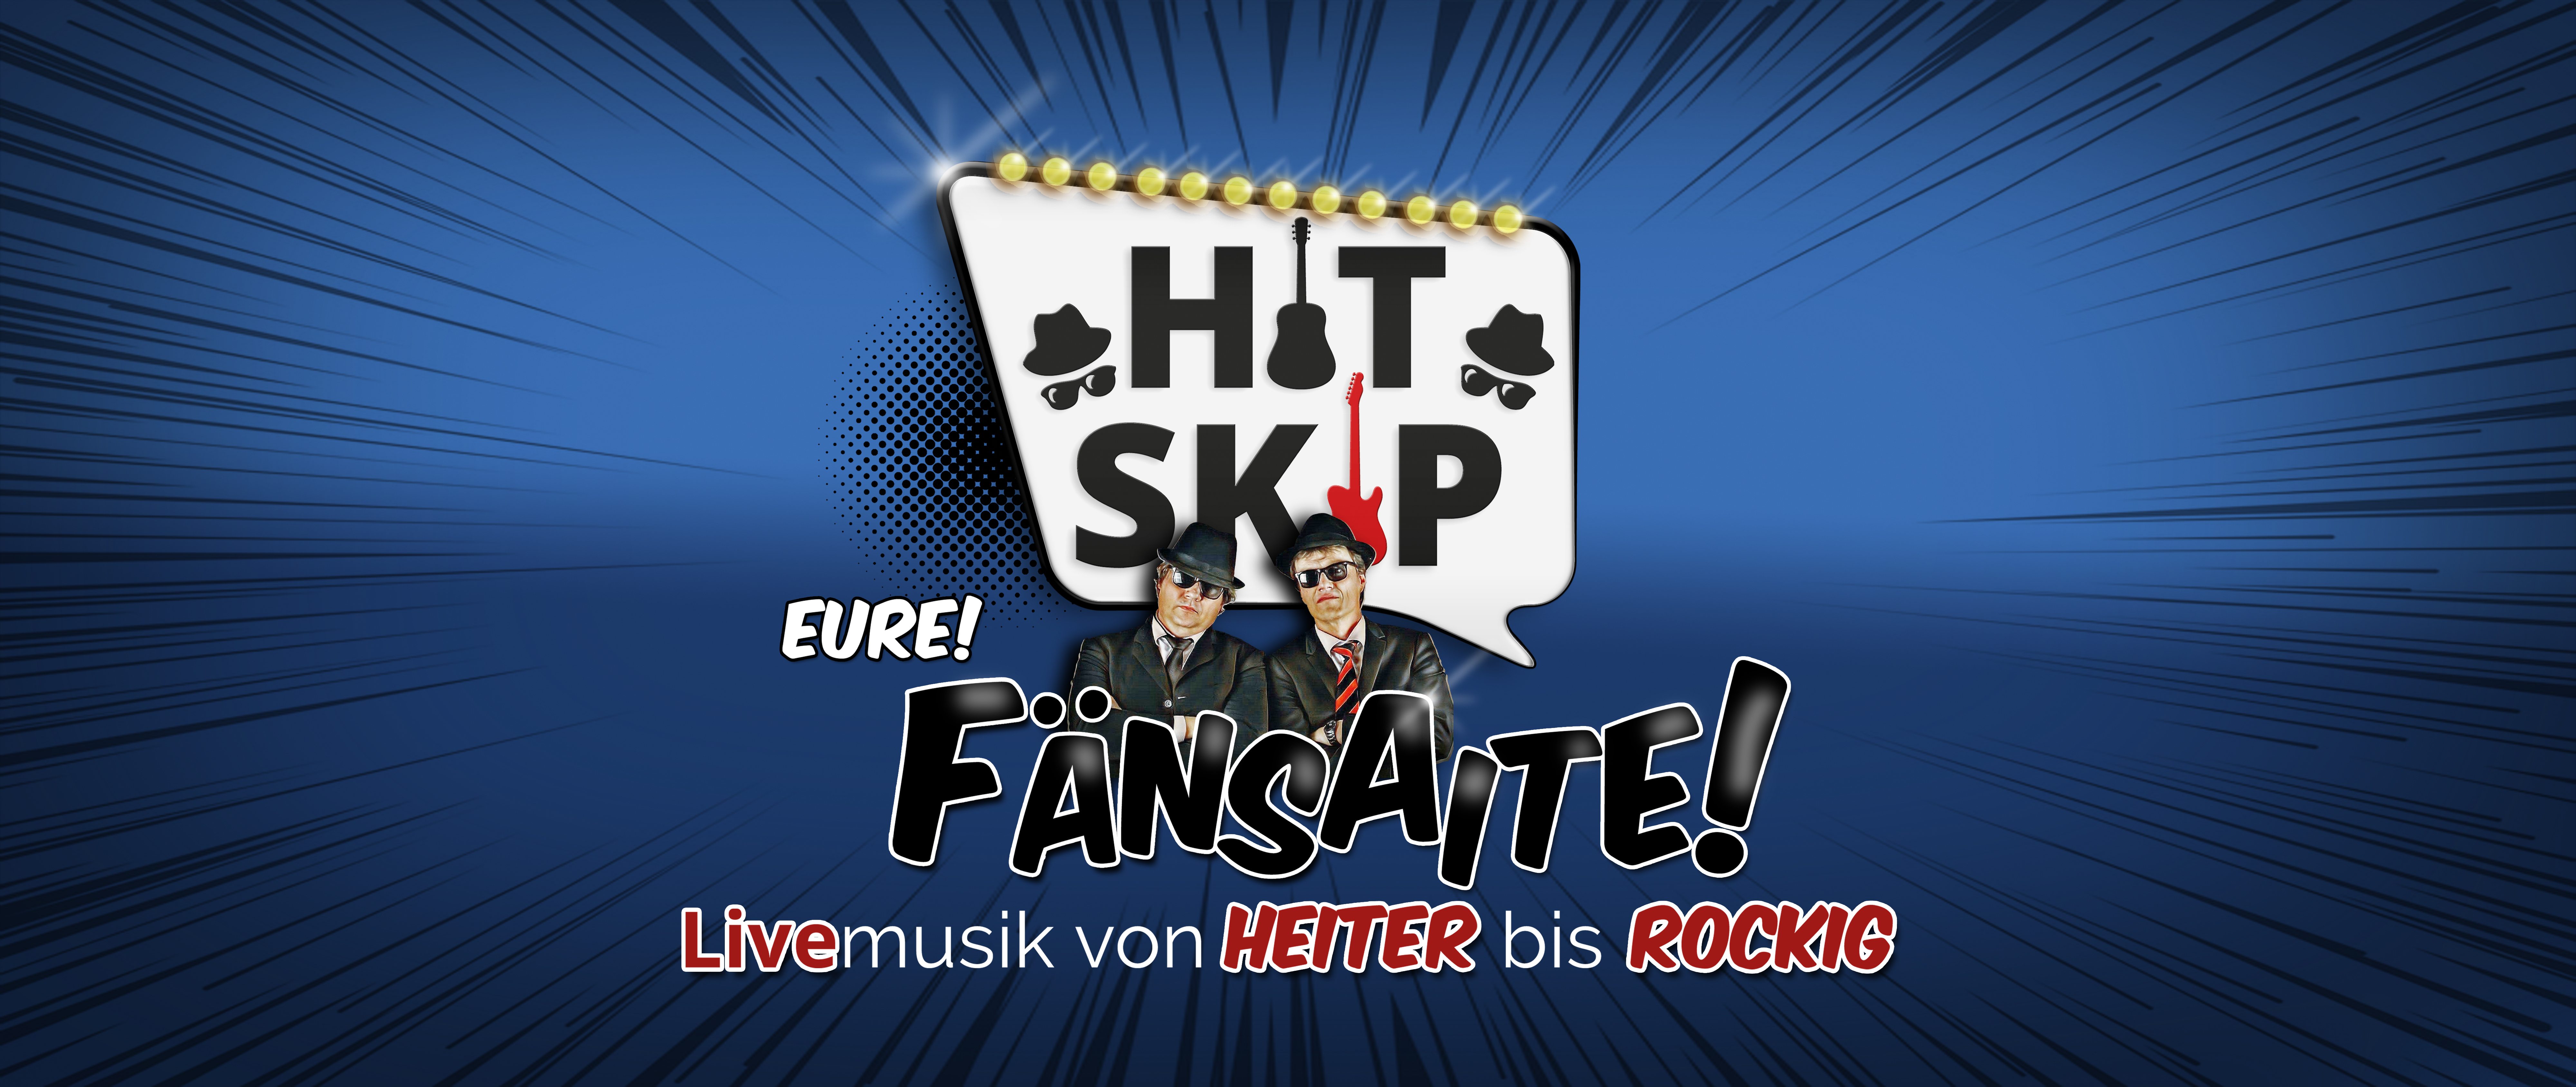 (c) Hit-skip.com